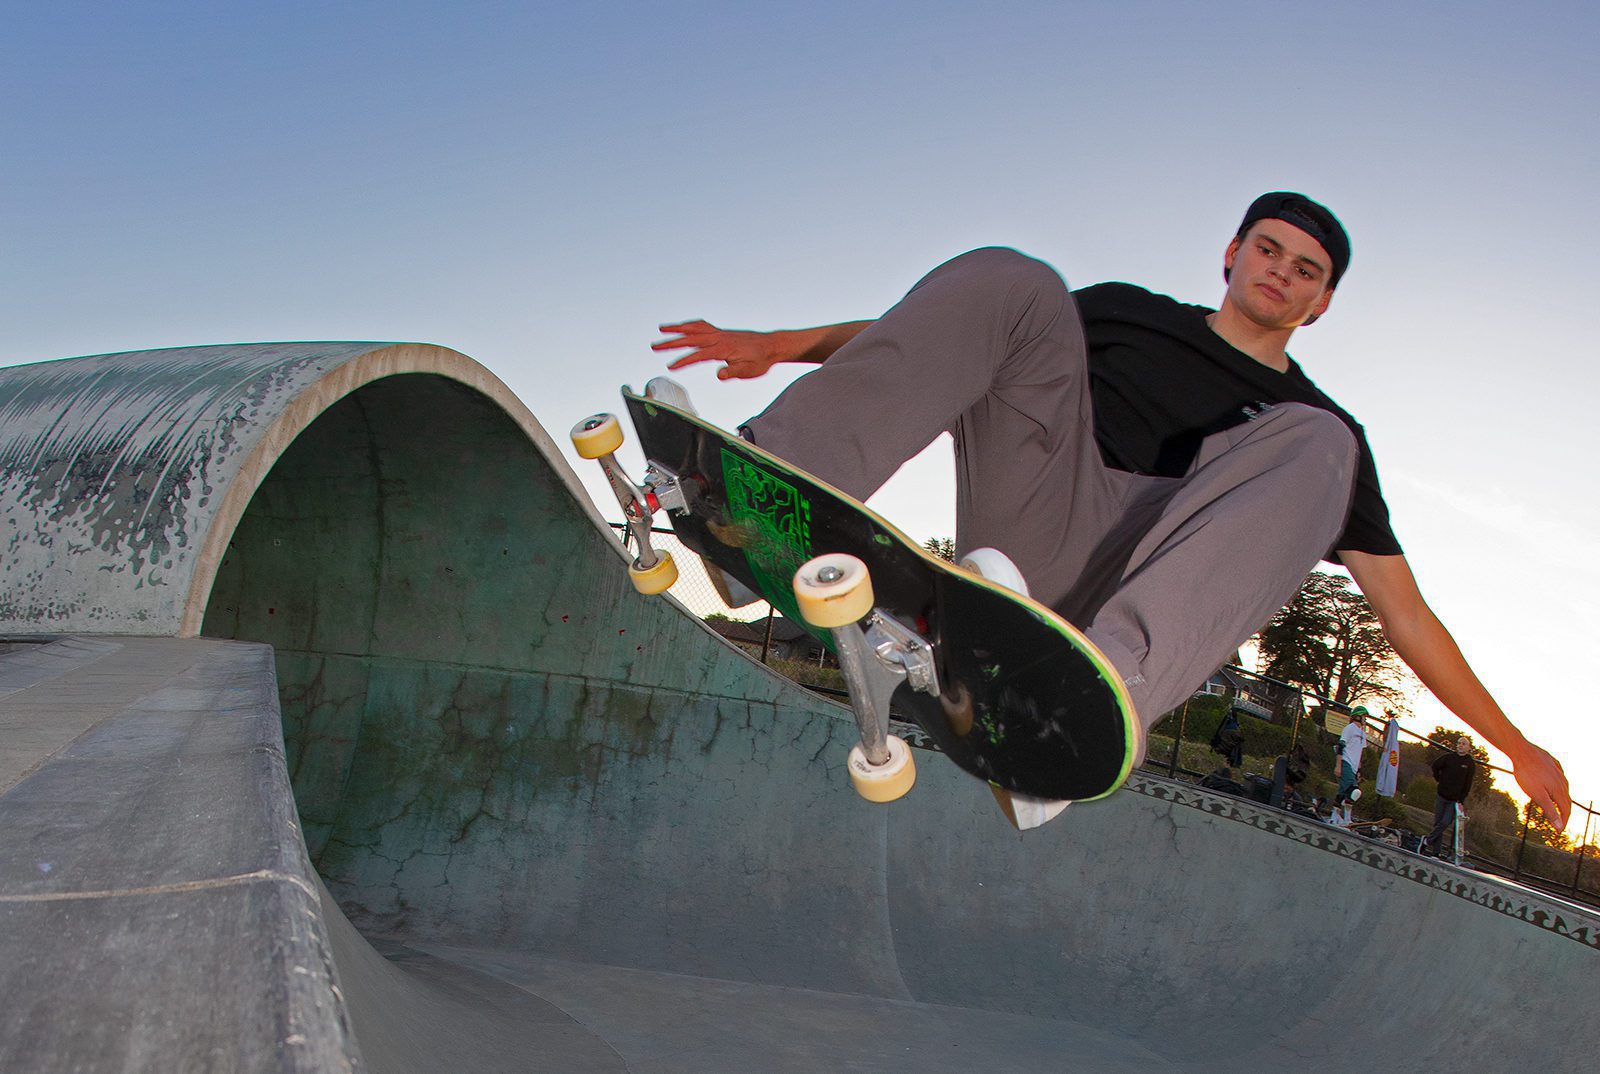 Skateboarder Nikki Rodger catching air at Mike Fox Skate Park in Santa Cruz, CA